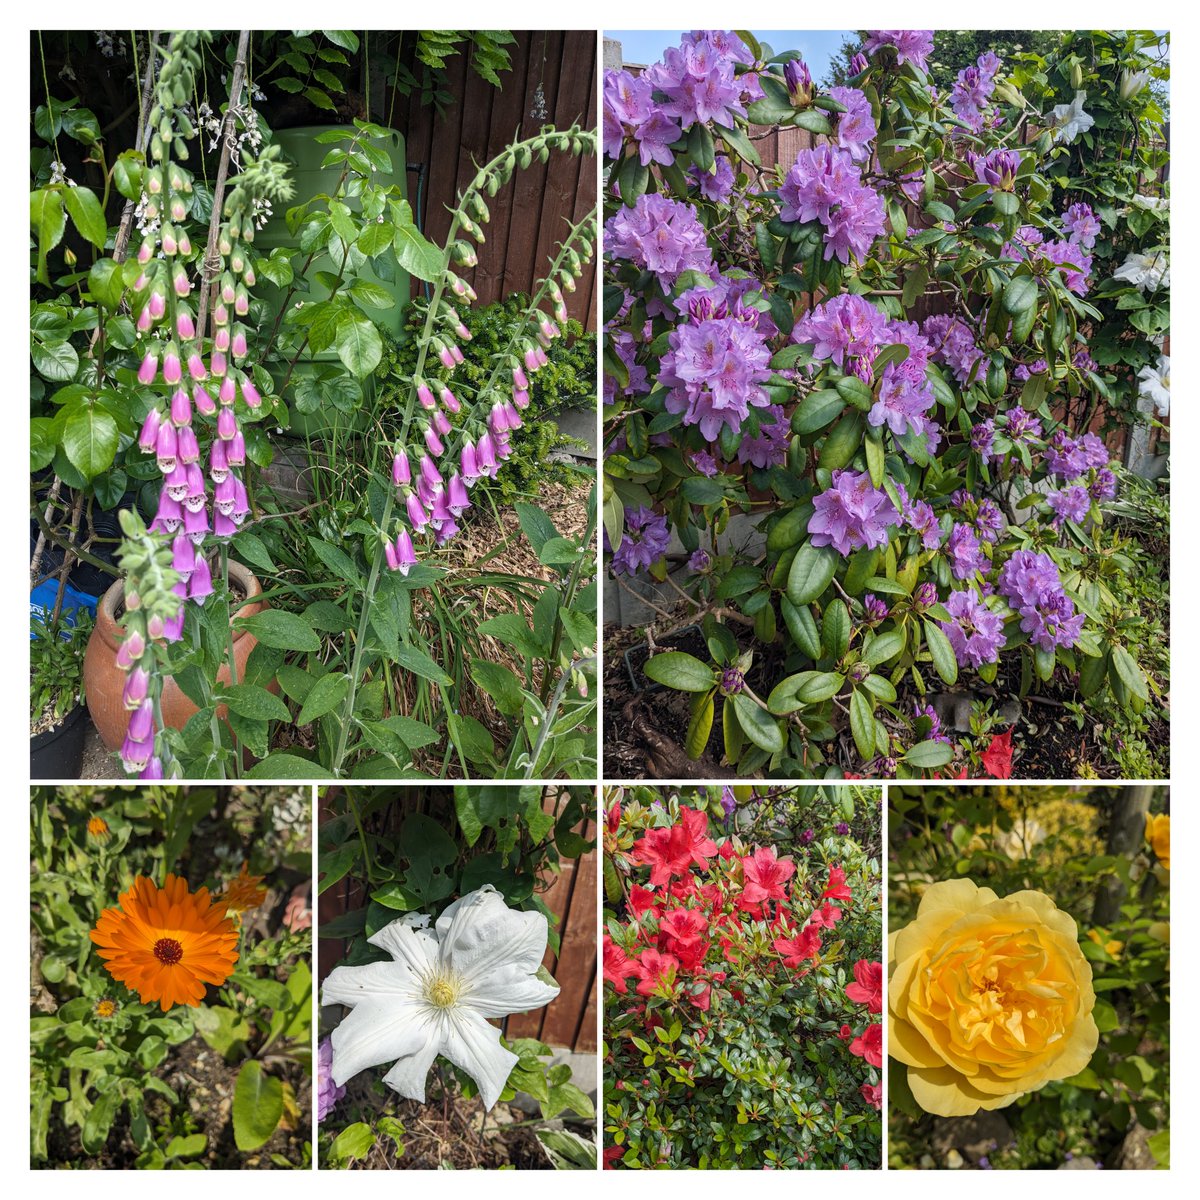 #SixOnSaturday on a Sunday.
Foxglove, rhododendron, calendula, clematis, azalea, rose. Happy gardening. #gardening